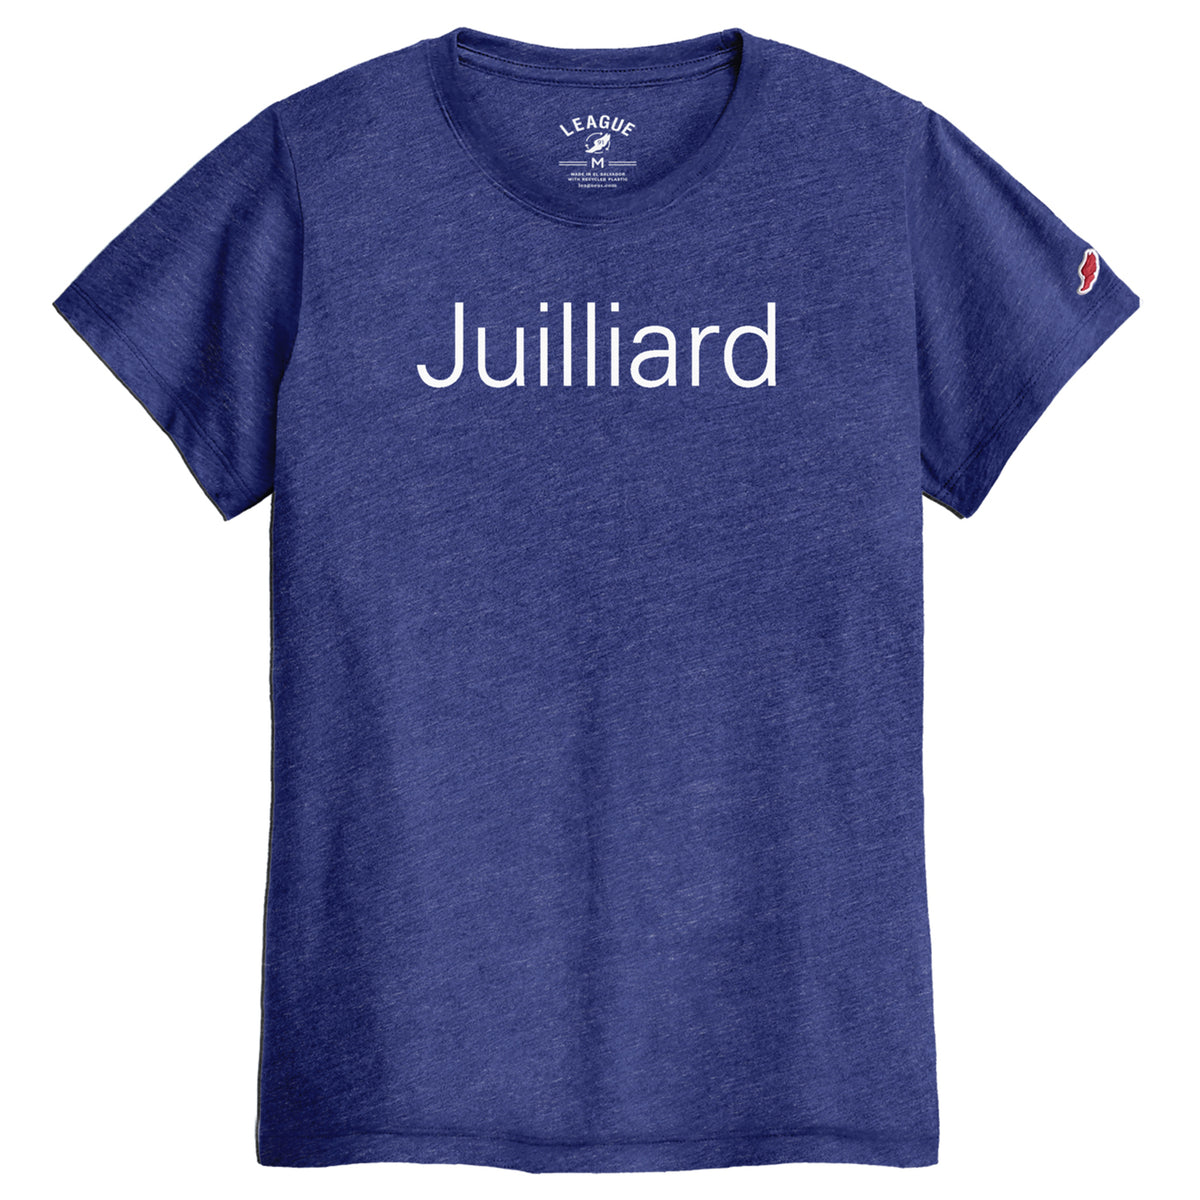 T-shirt: Juilliard Intramural universal font (ladies cut) (Earth friendly)